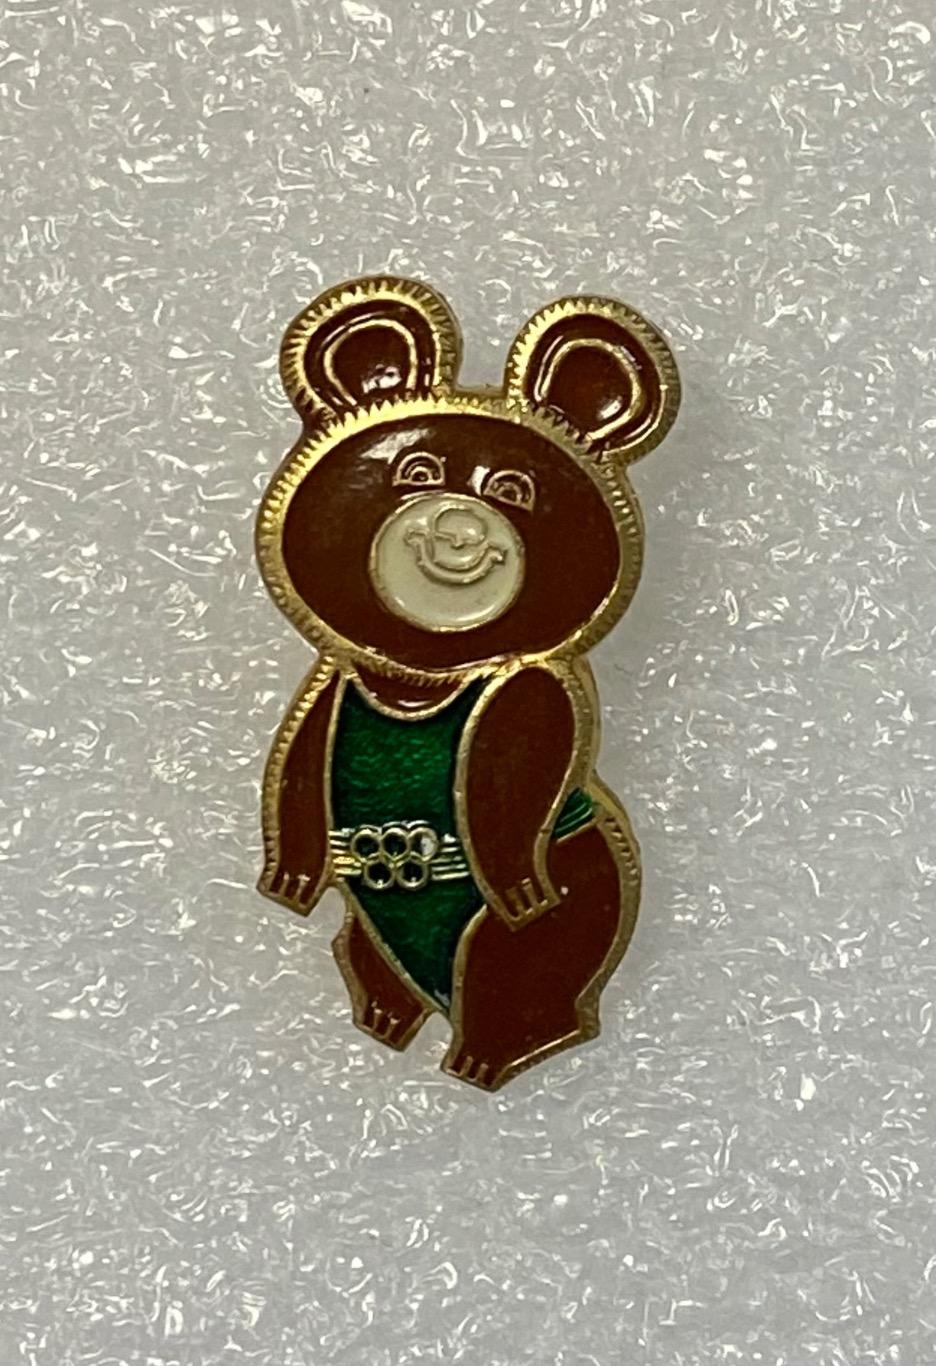 Москва-80 Олимпиада, Мишка Олимпийский коричневый в зеленой форме, значок